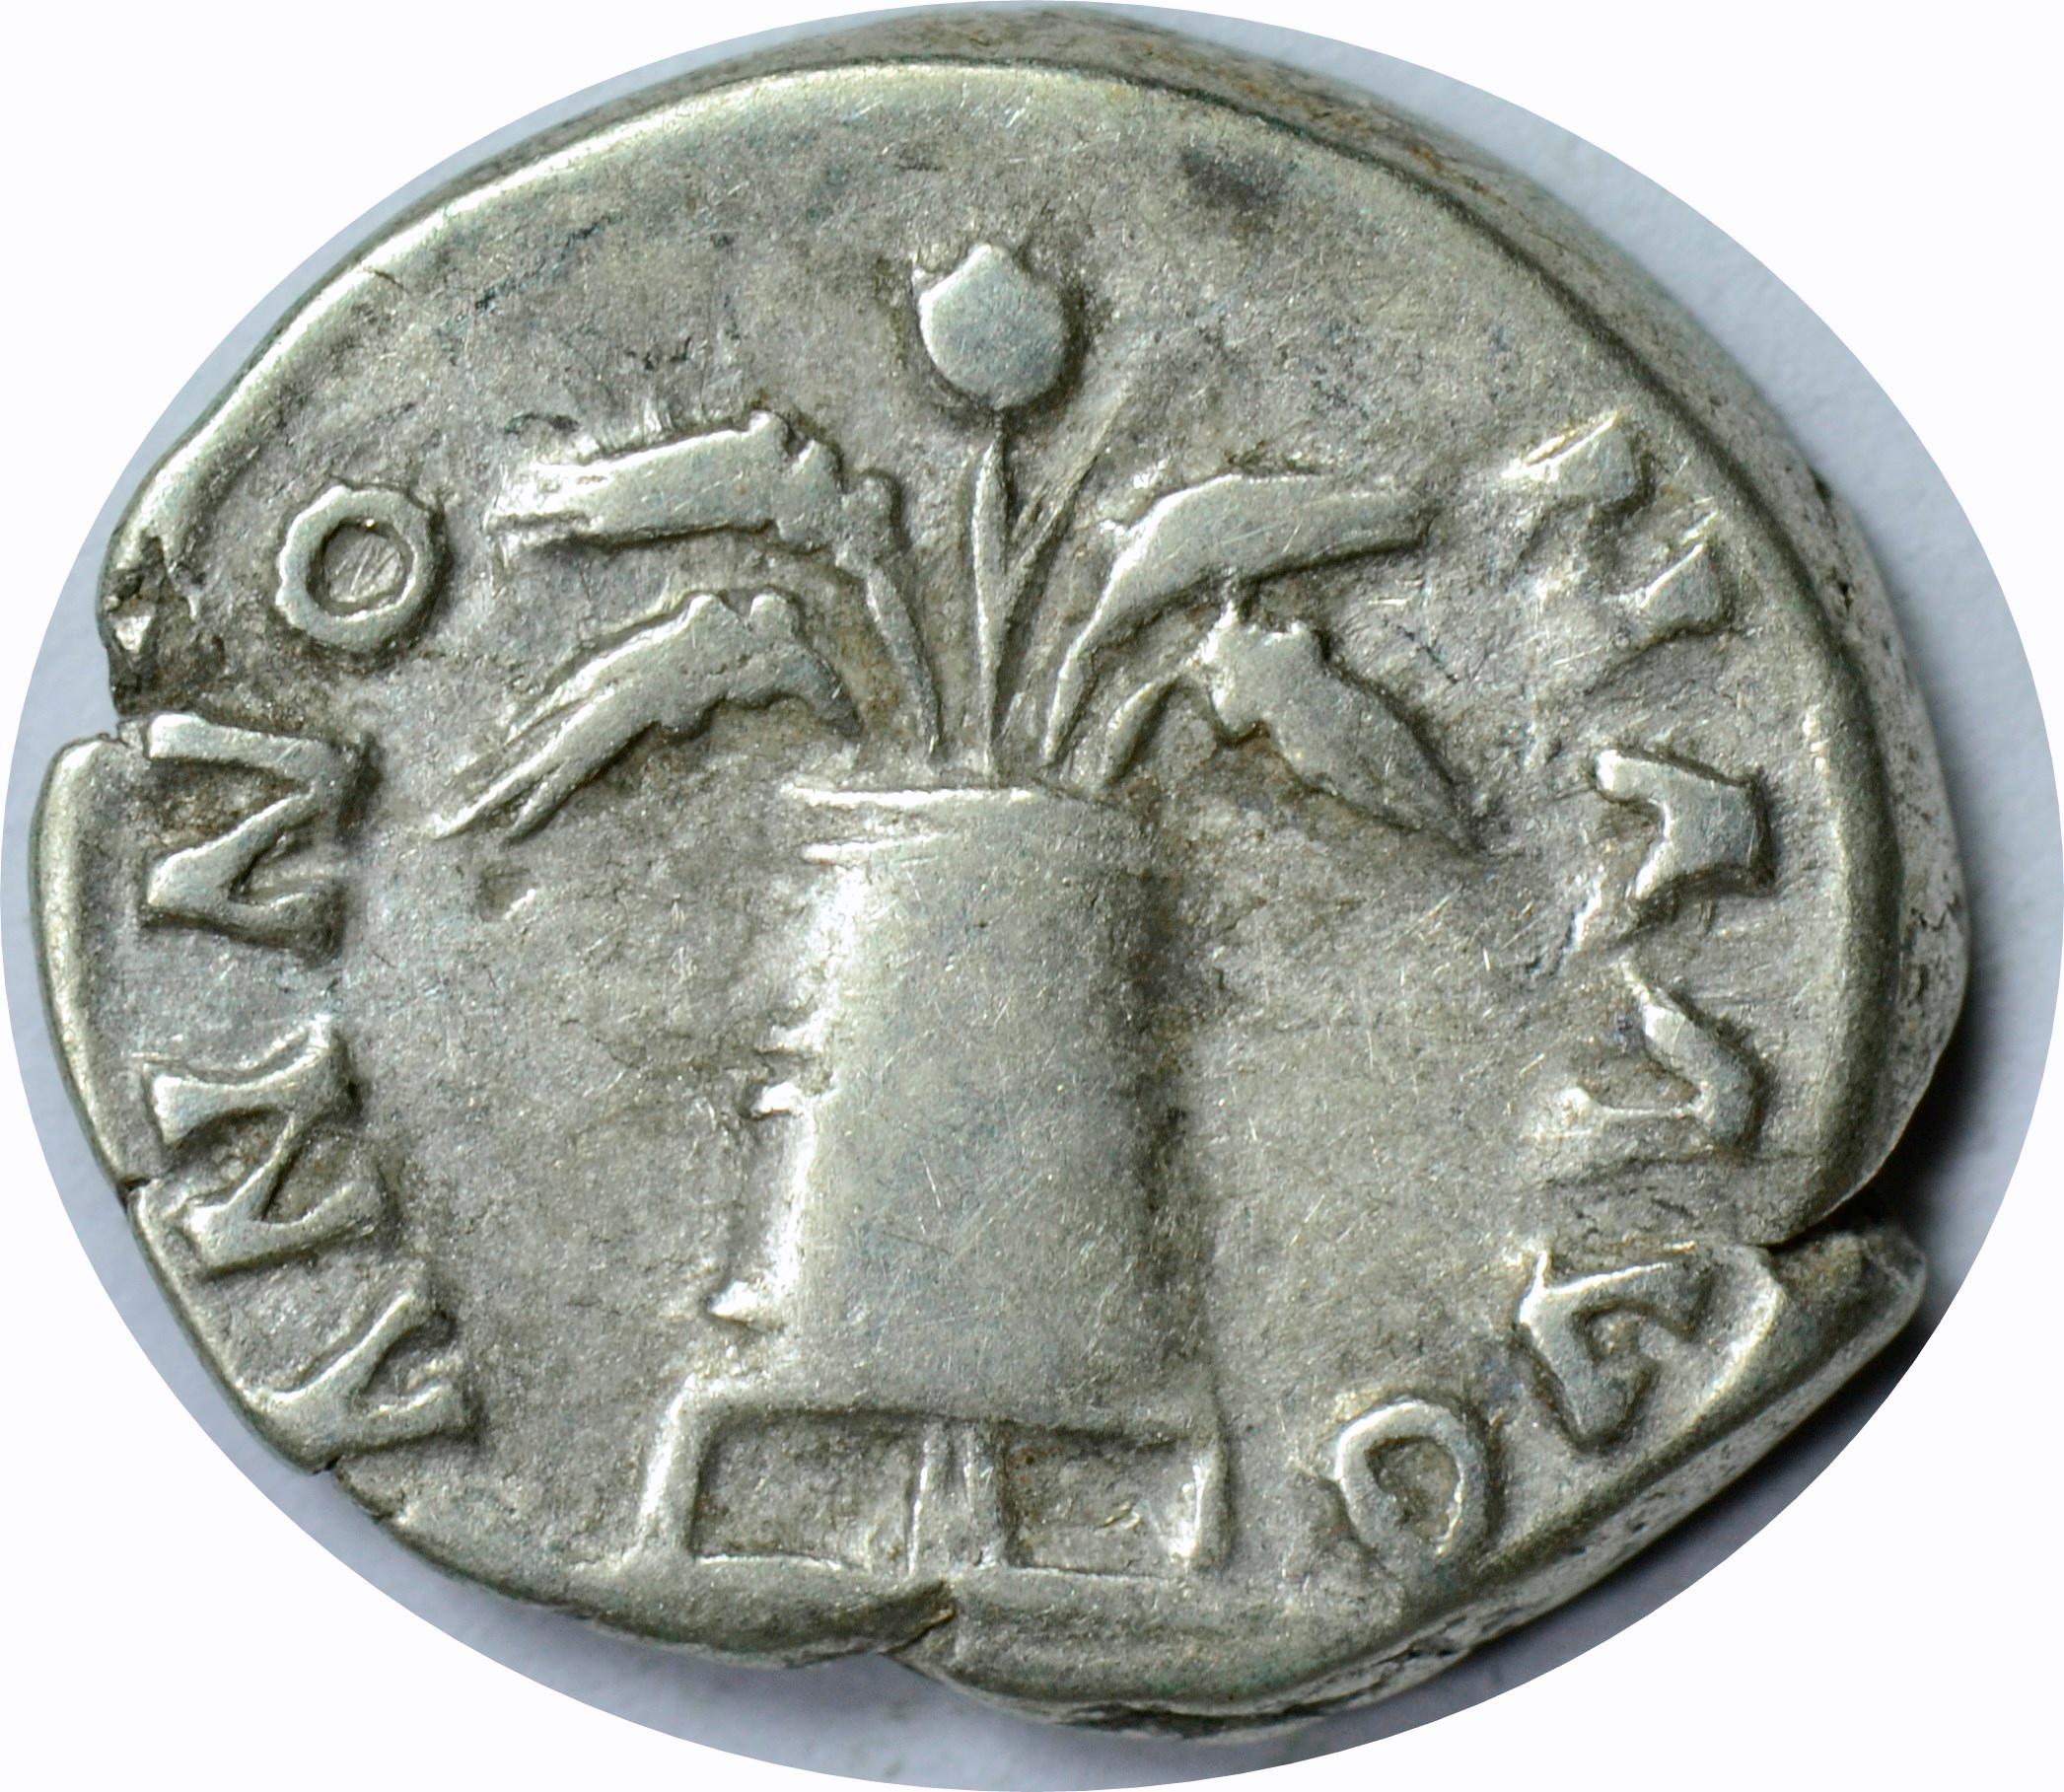 ANCIENT ROME - HADRIAN - SILVER COIN - 117-138 AD